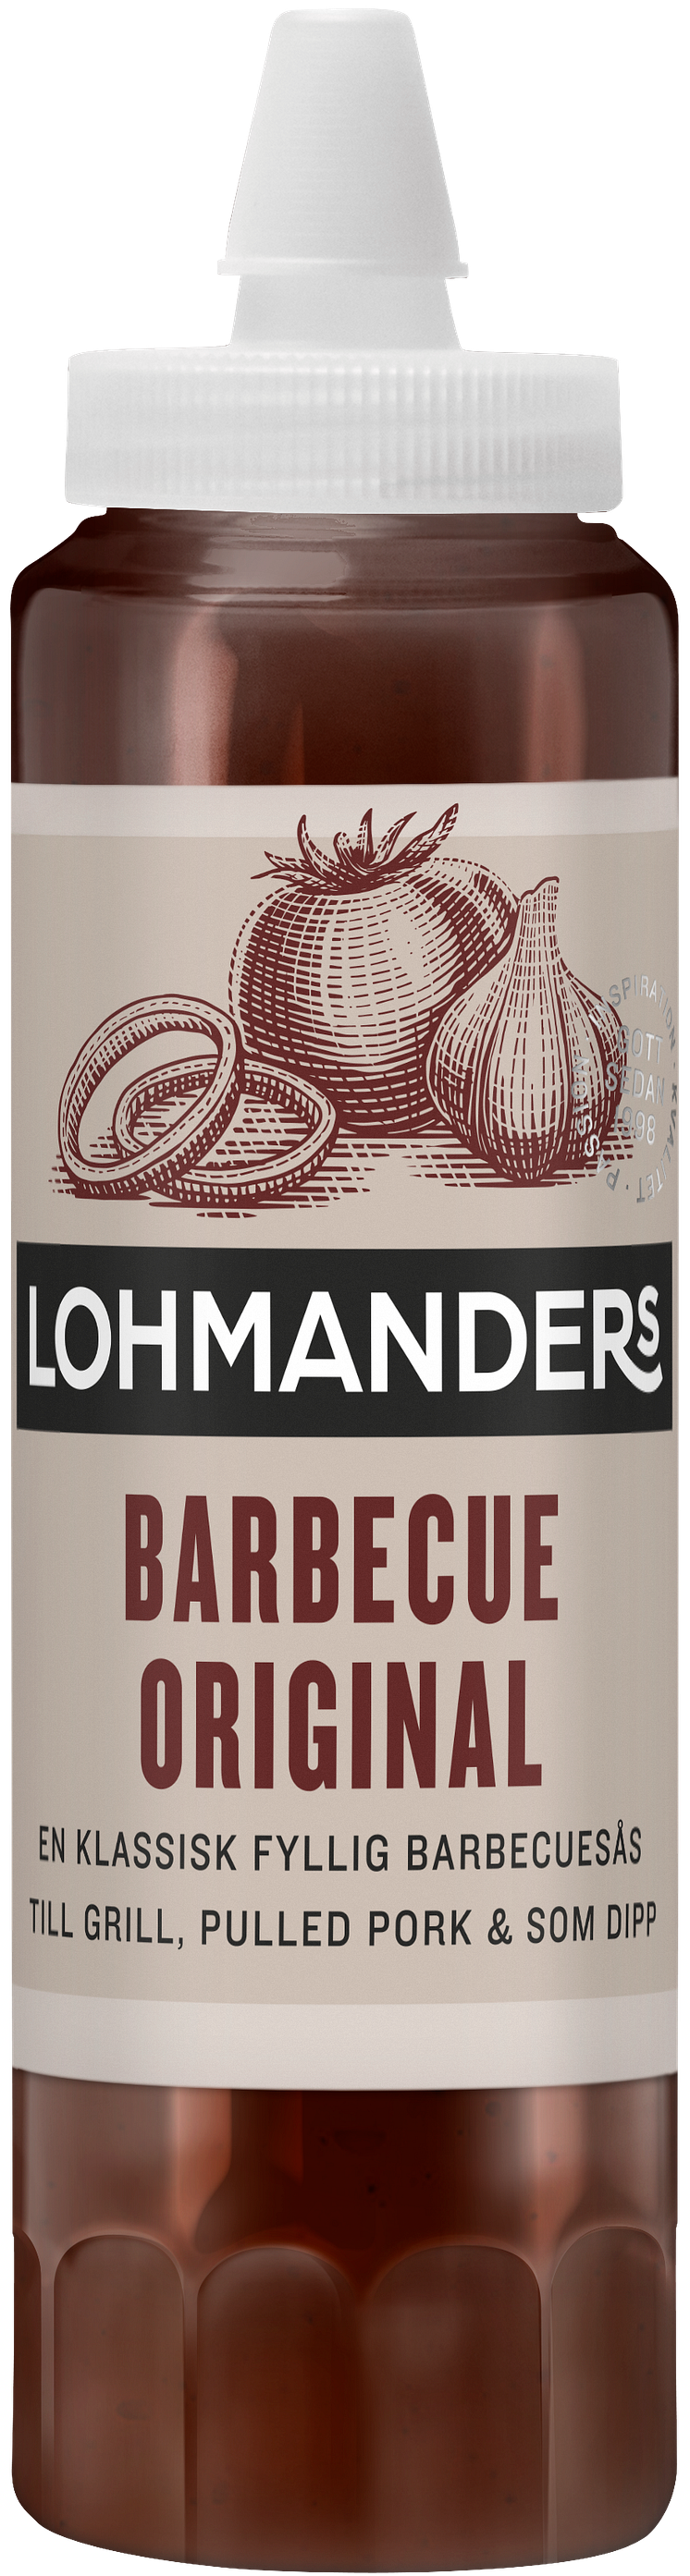 149875 621021 Lohmanders Barbecue Original 250ml FRONT R3